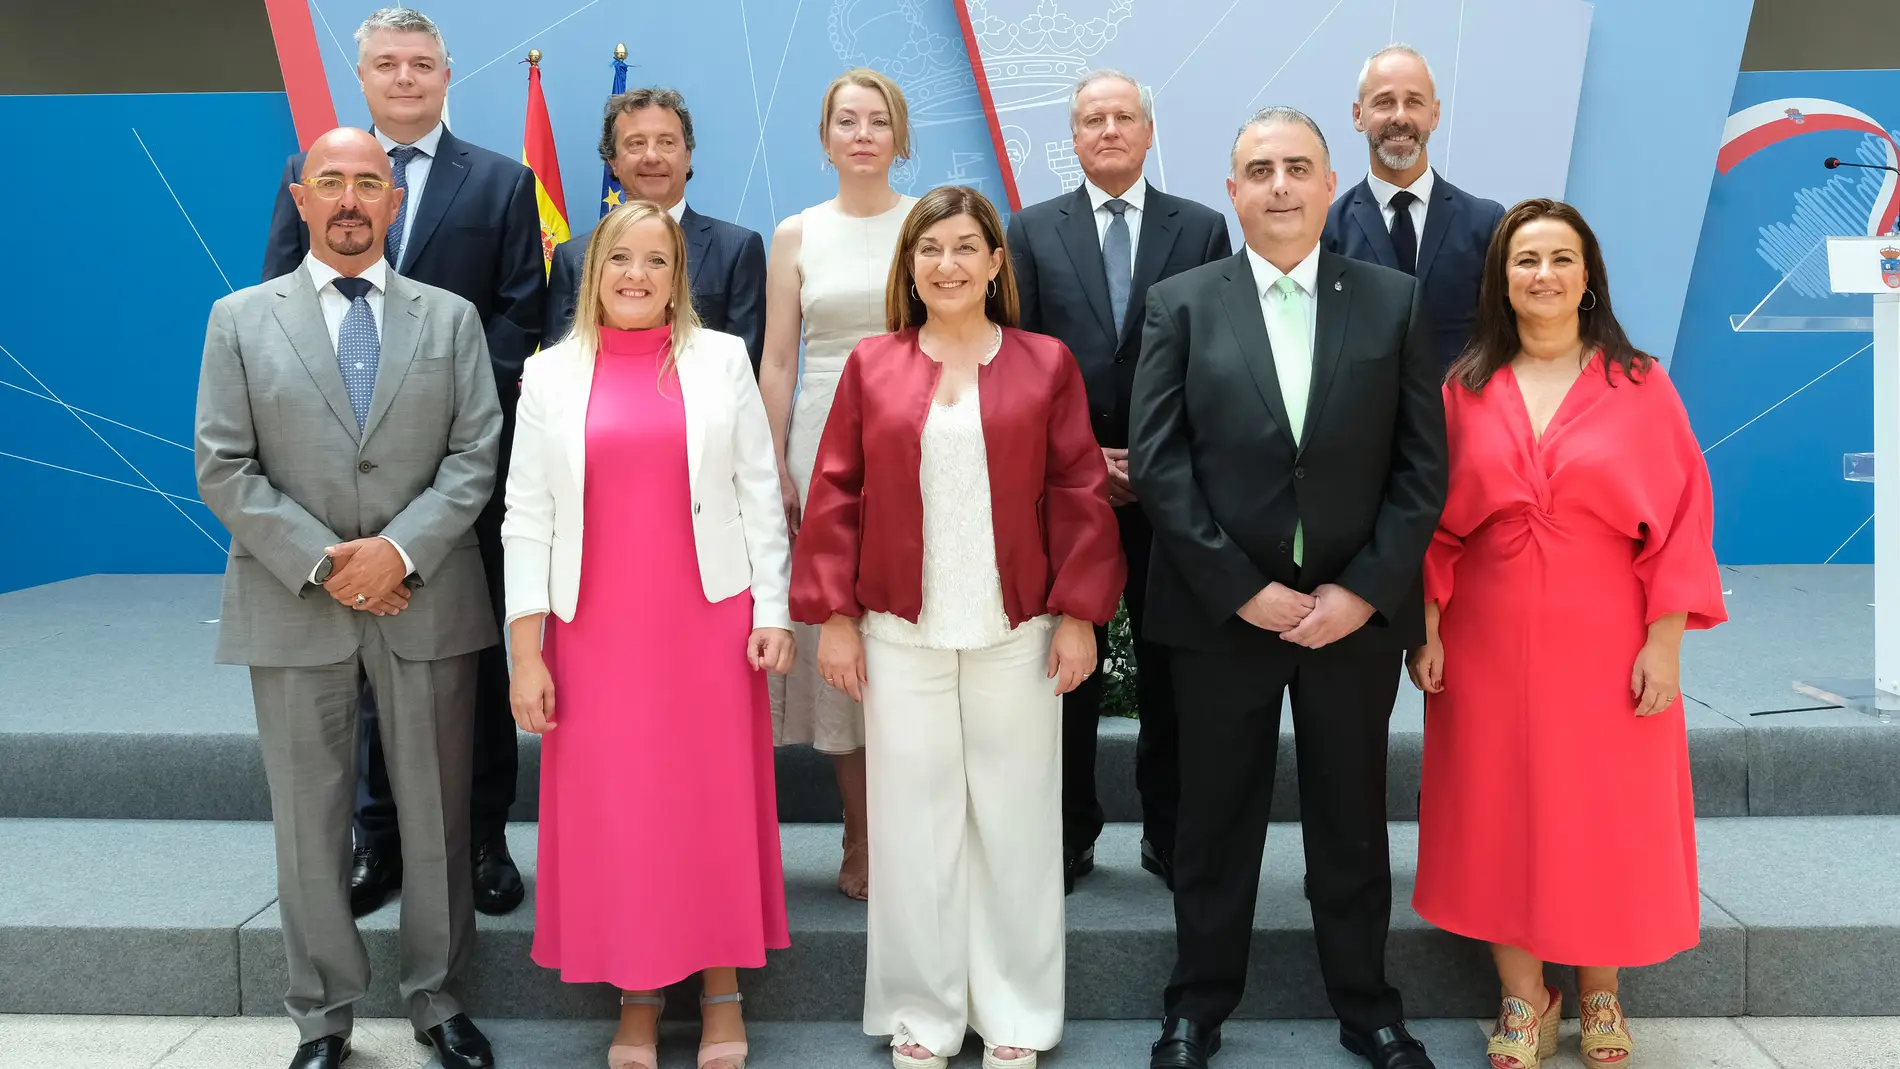 Consejo de Gobierno de Cantabria